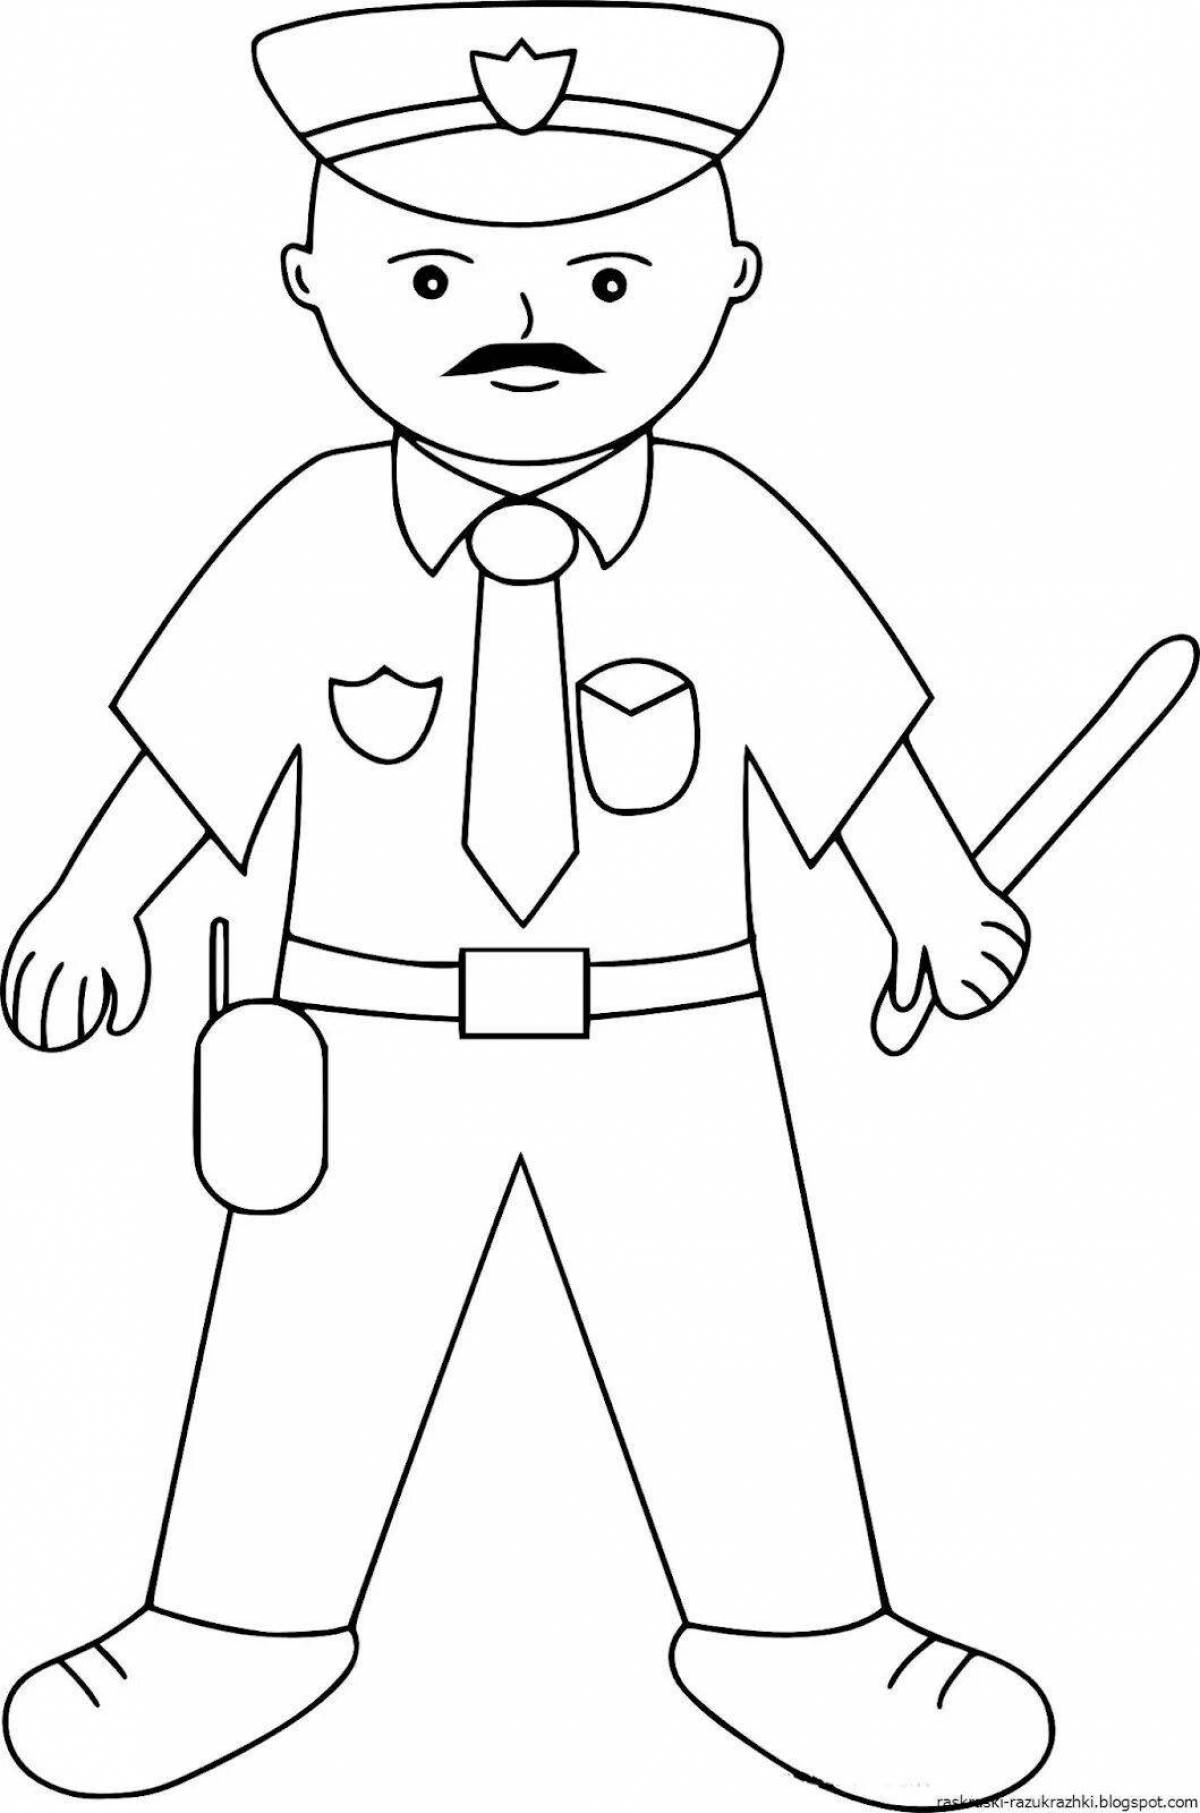 Cop profession coloring page